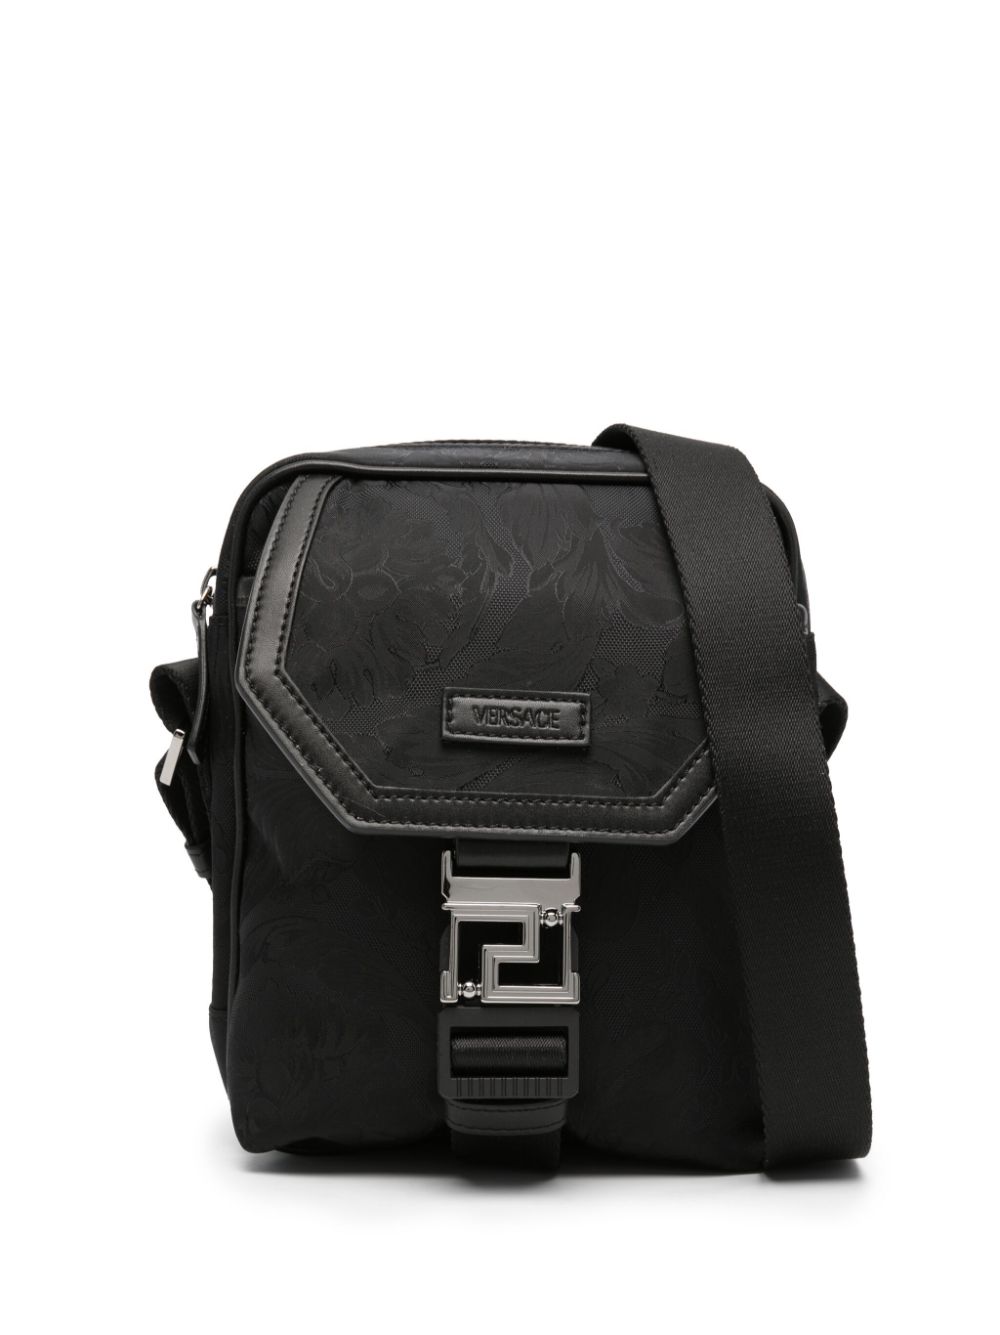 Versace VERSACE- Nylon Messenger Bag